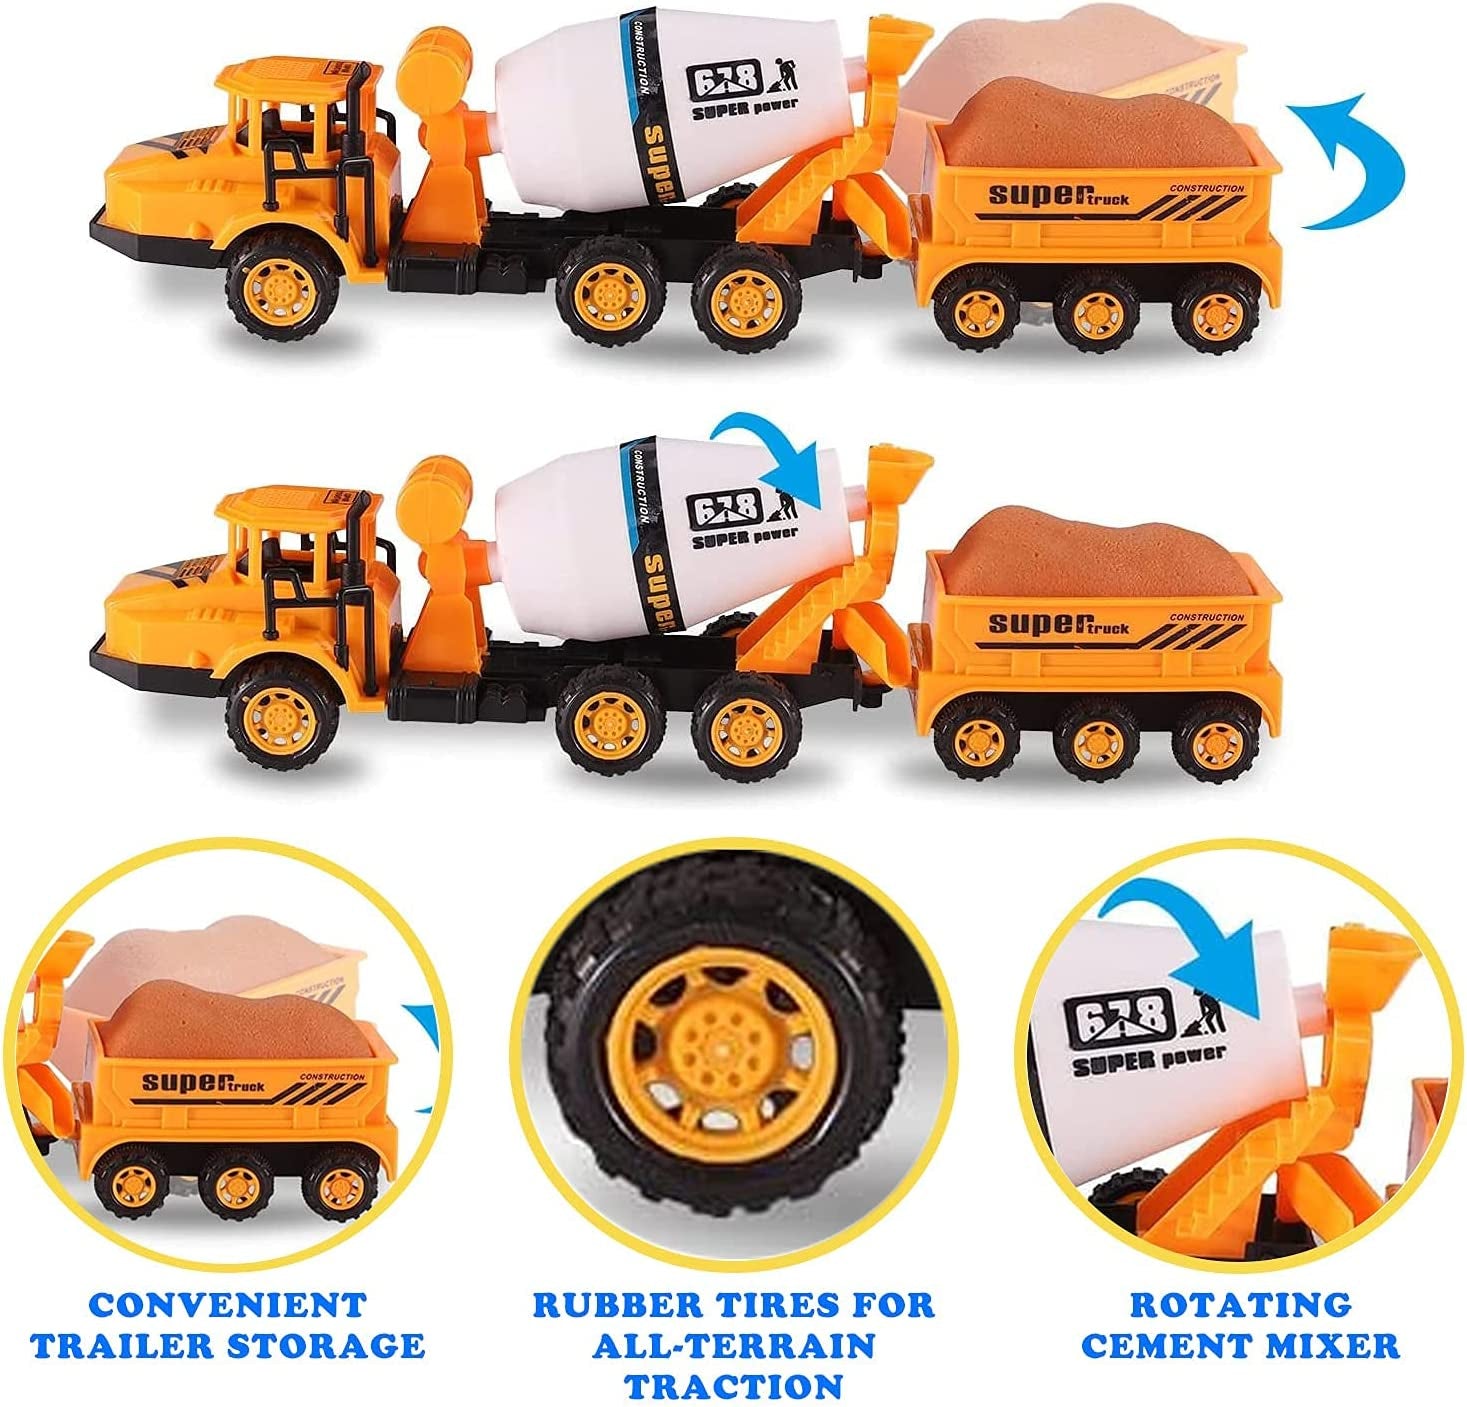 Big Rig Construction Tow Trucks W/ Trailers Toy Cargo Transport Vehicles Playset - Kids Hauler Play Set W/ Dump Truck, Cement Mixer, Excavator (3 Pack)